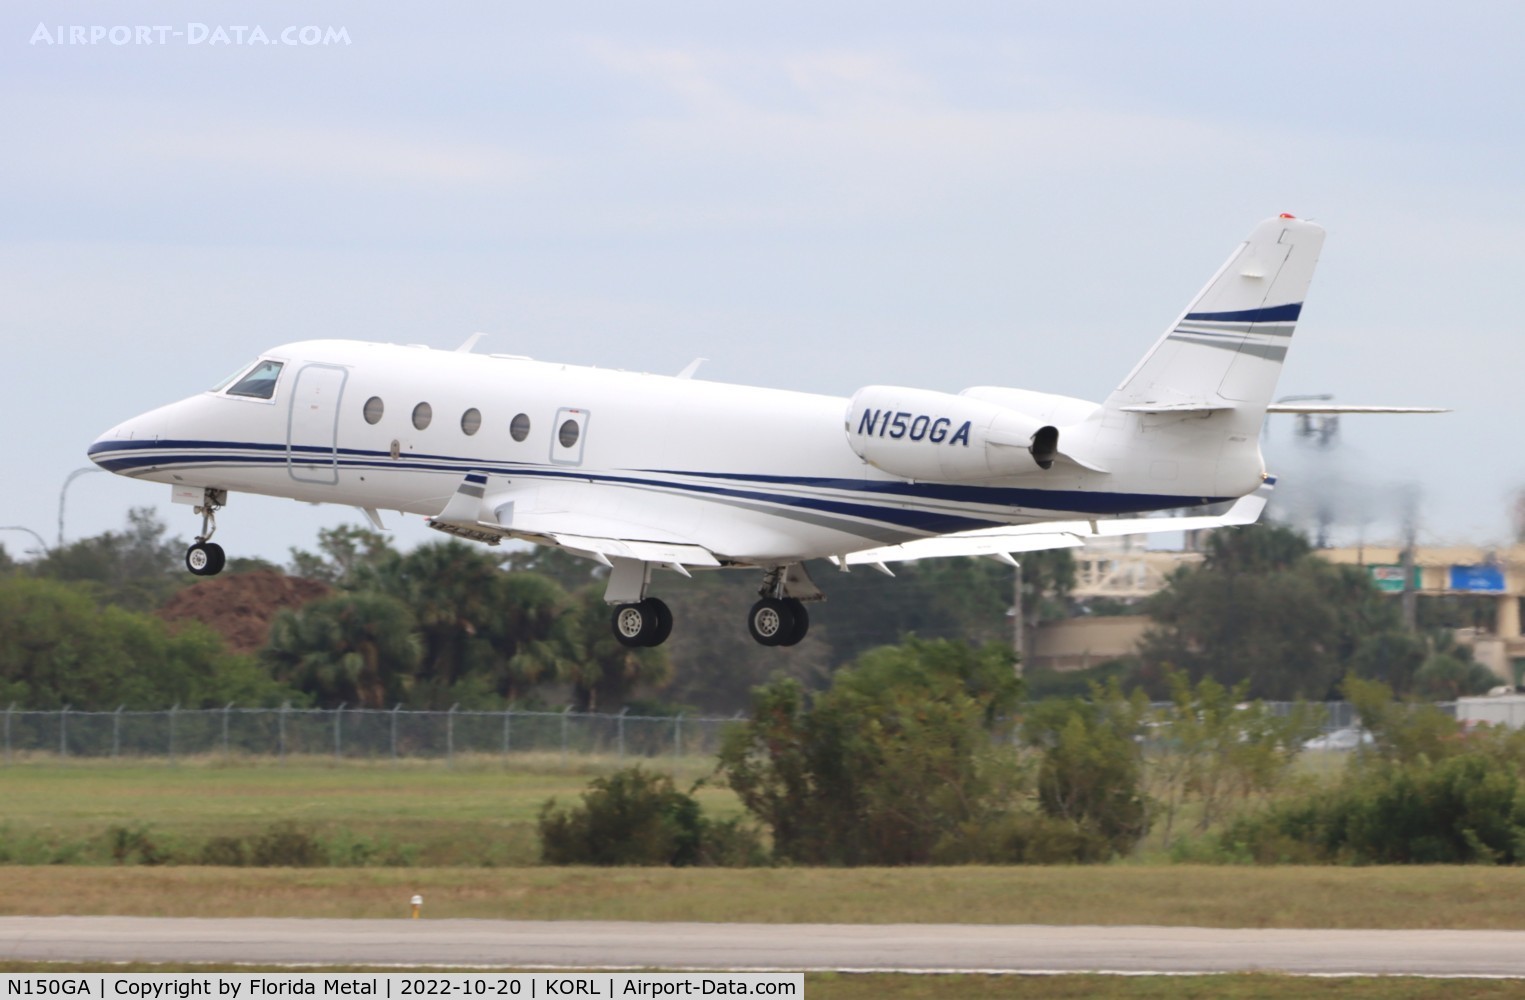 N150GA, 2007 Israel Aerospace Industries Gulfstream G150 C/N 286, NBAA 2022